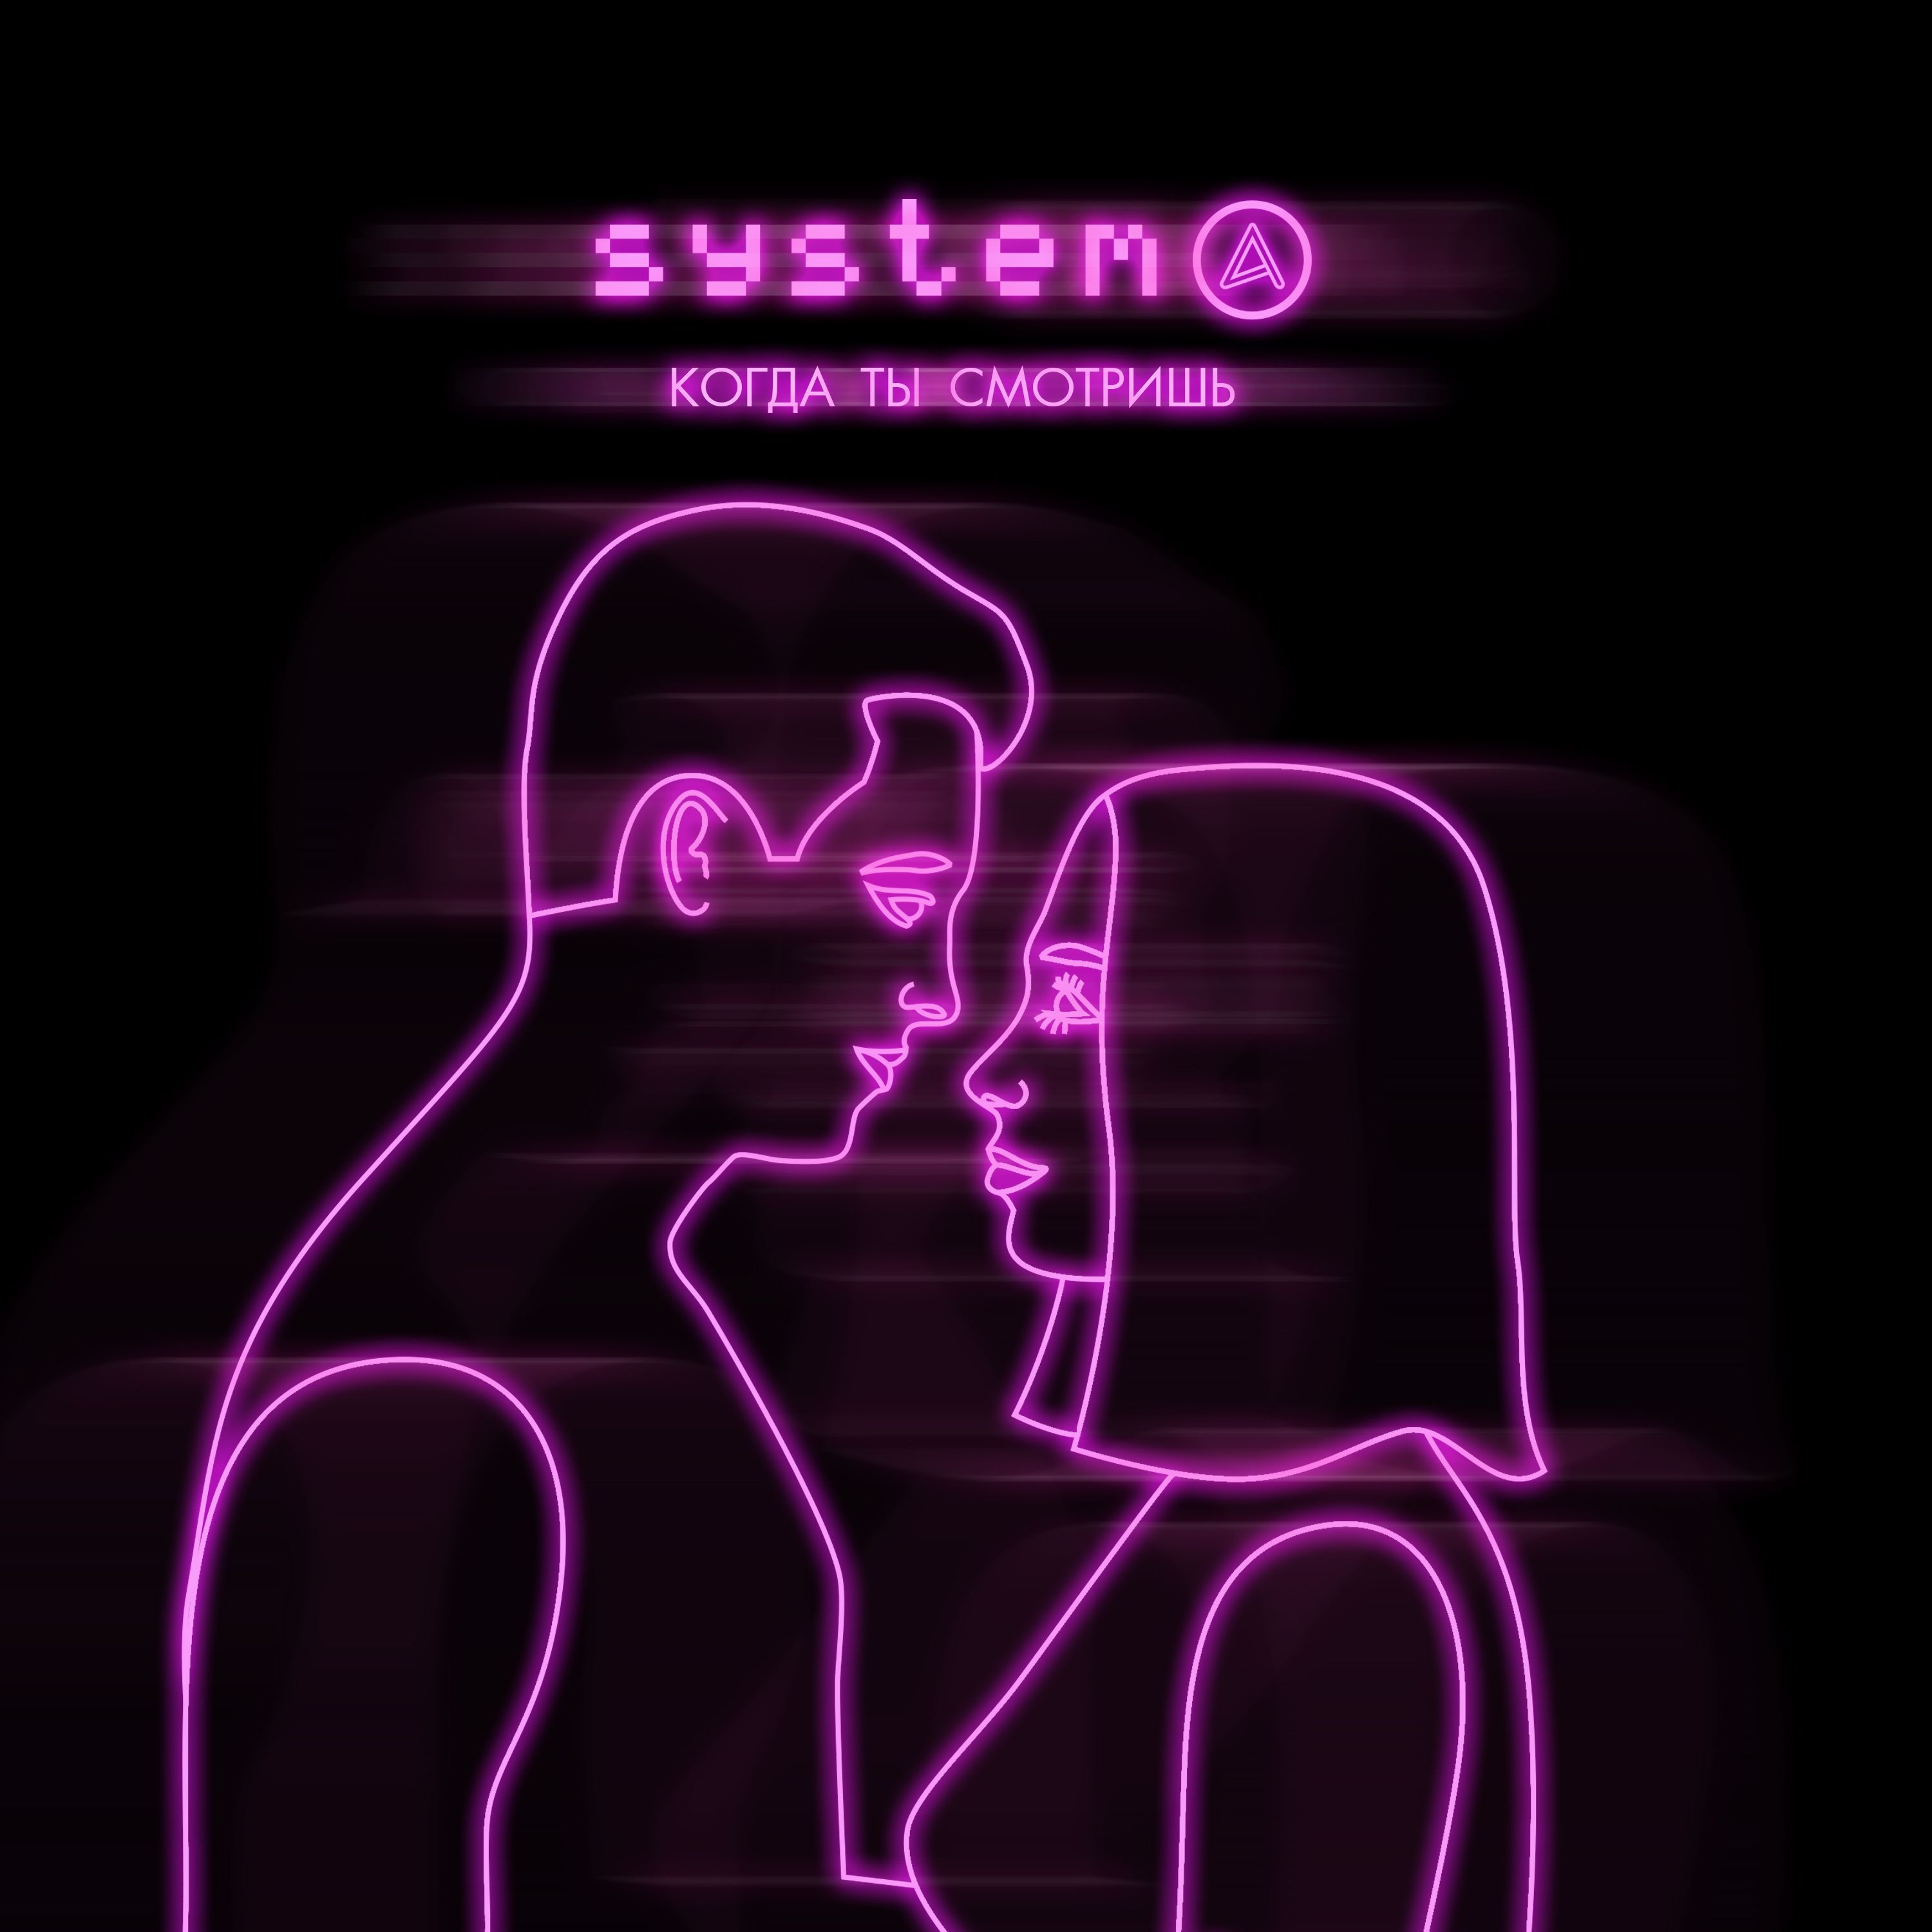 Khoasolla Systema - Когда ты смотришь